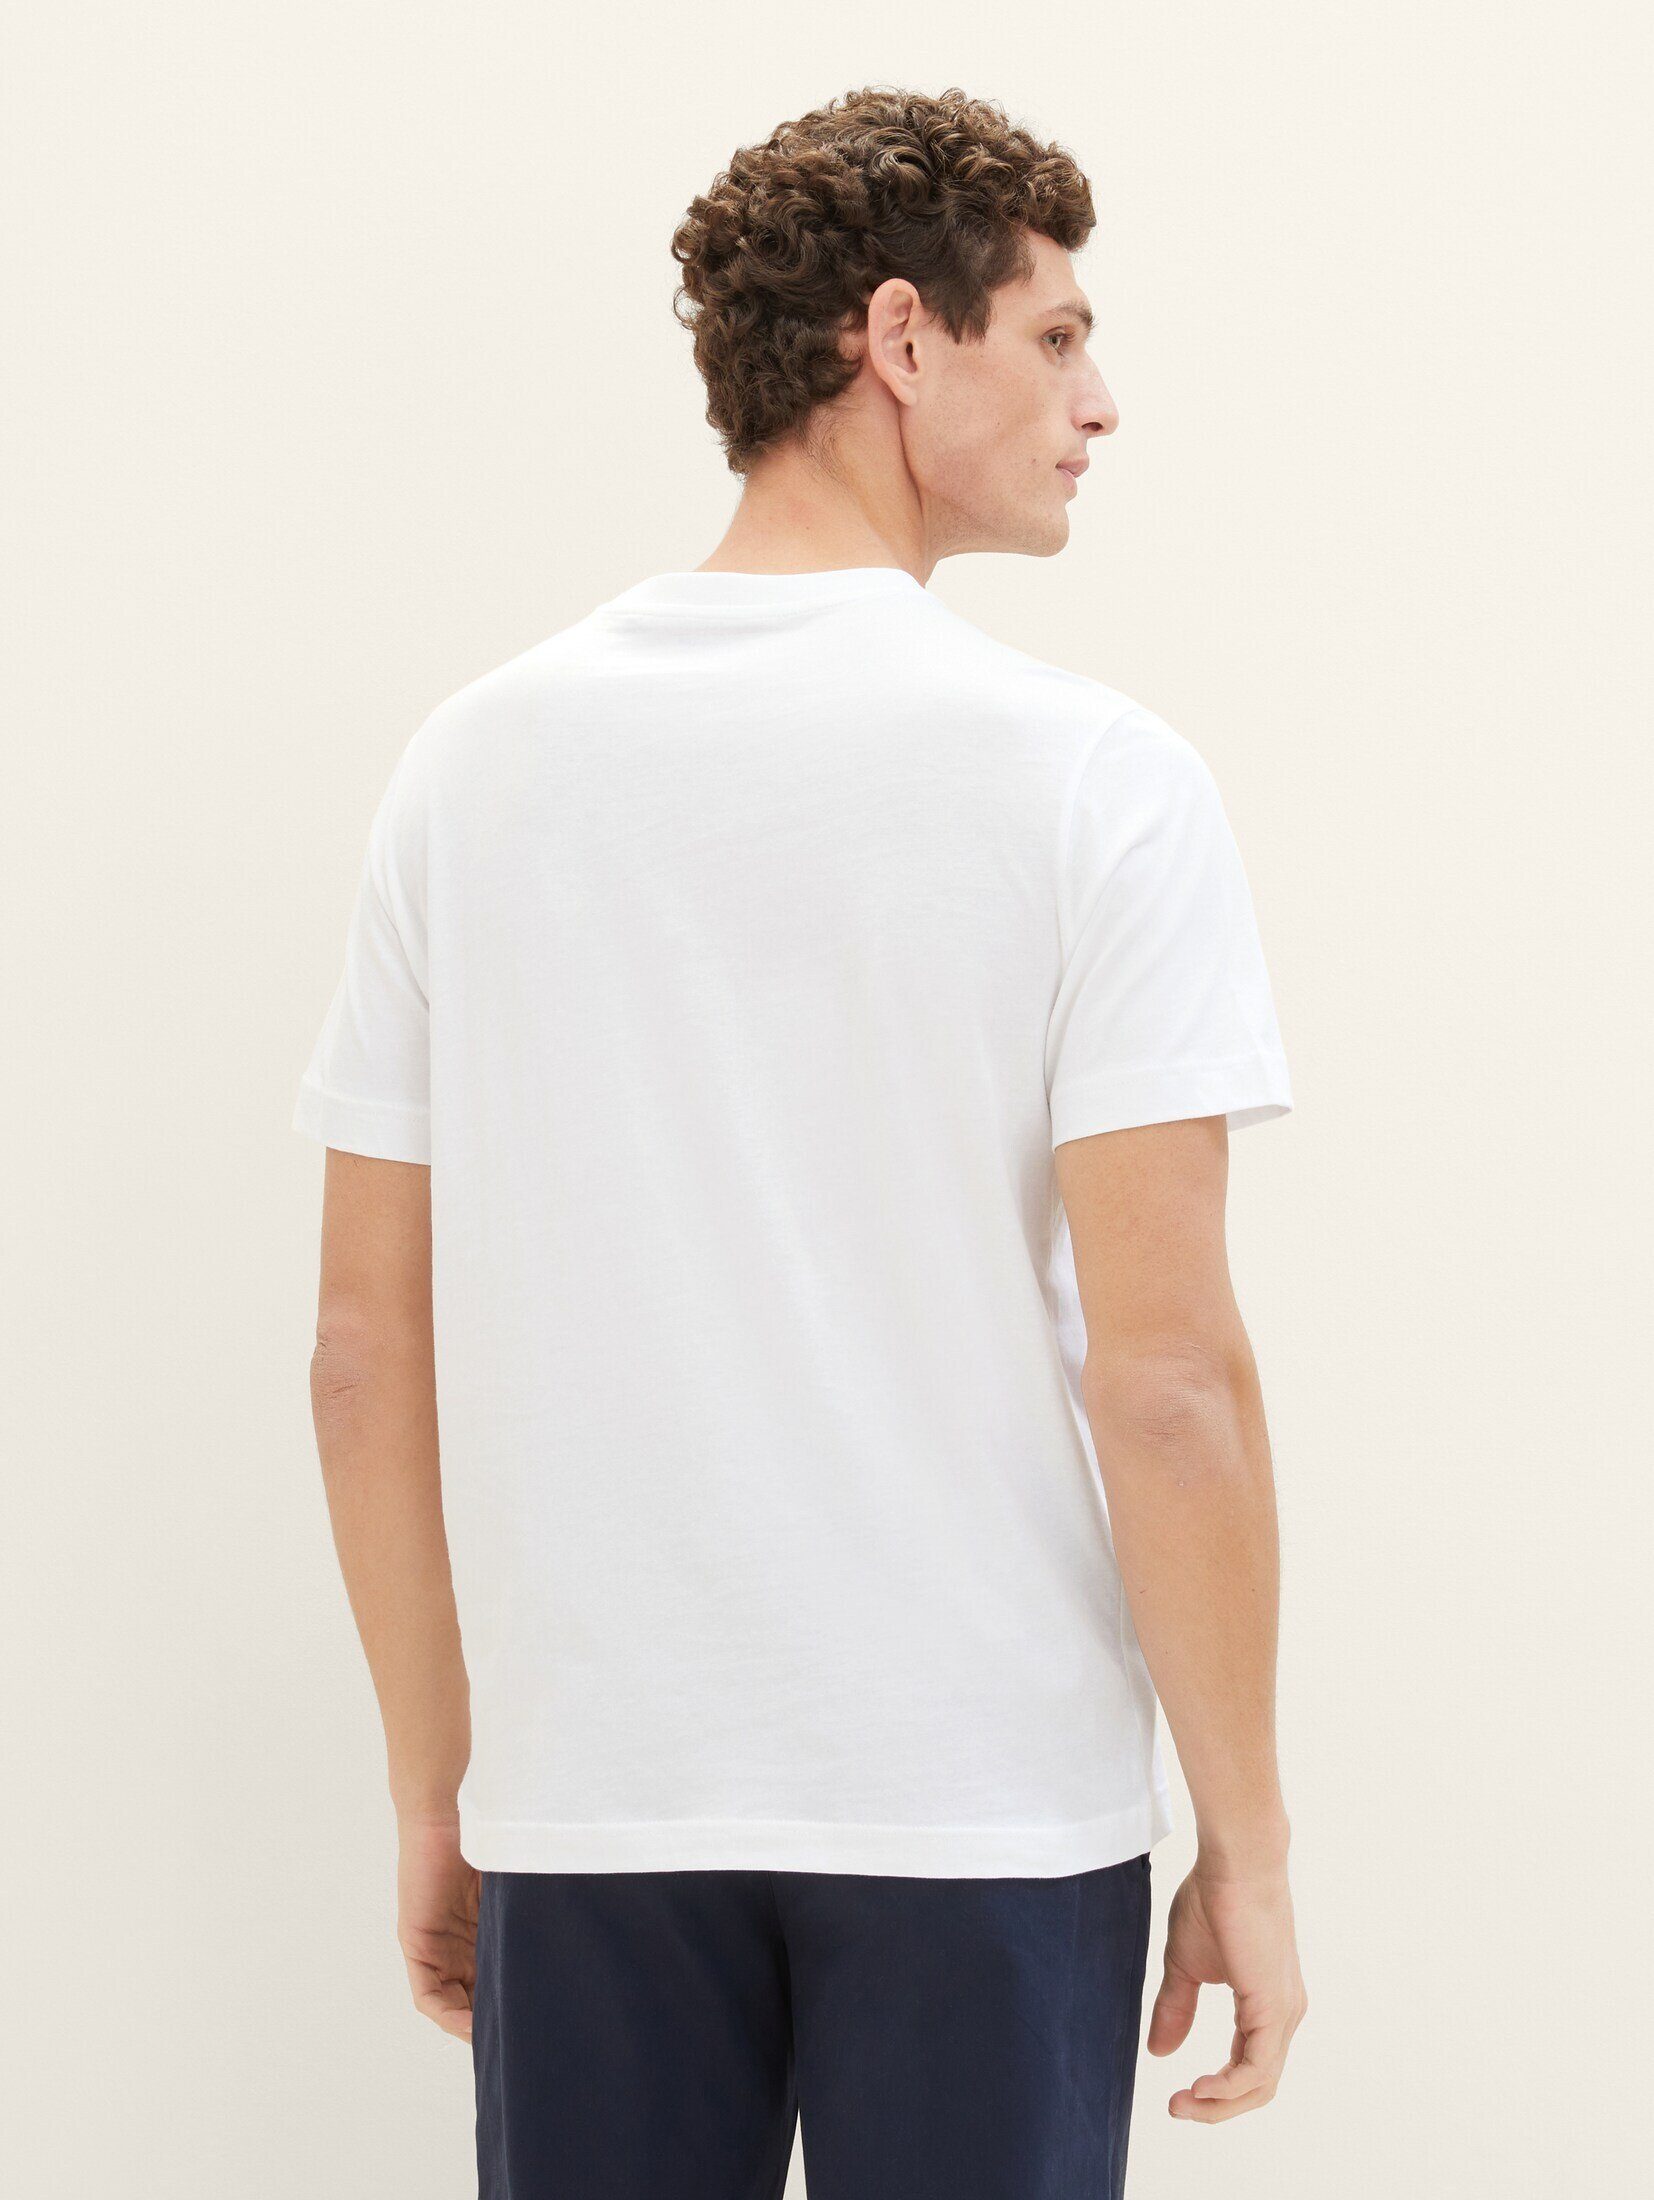 White Print T-Shirt T-Shirt TAILOR TOM Logo mit